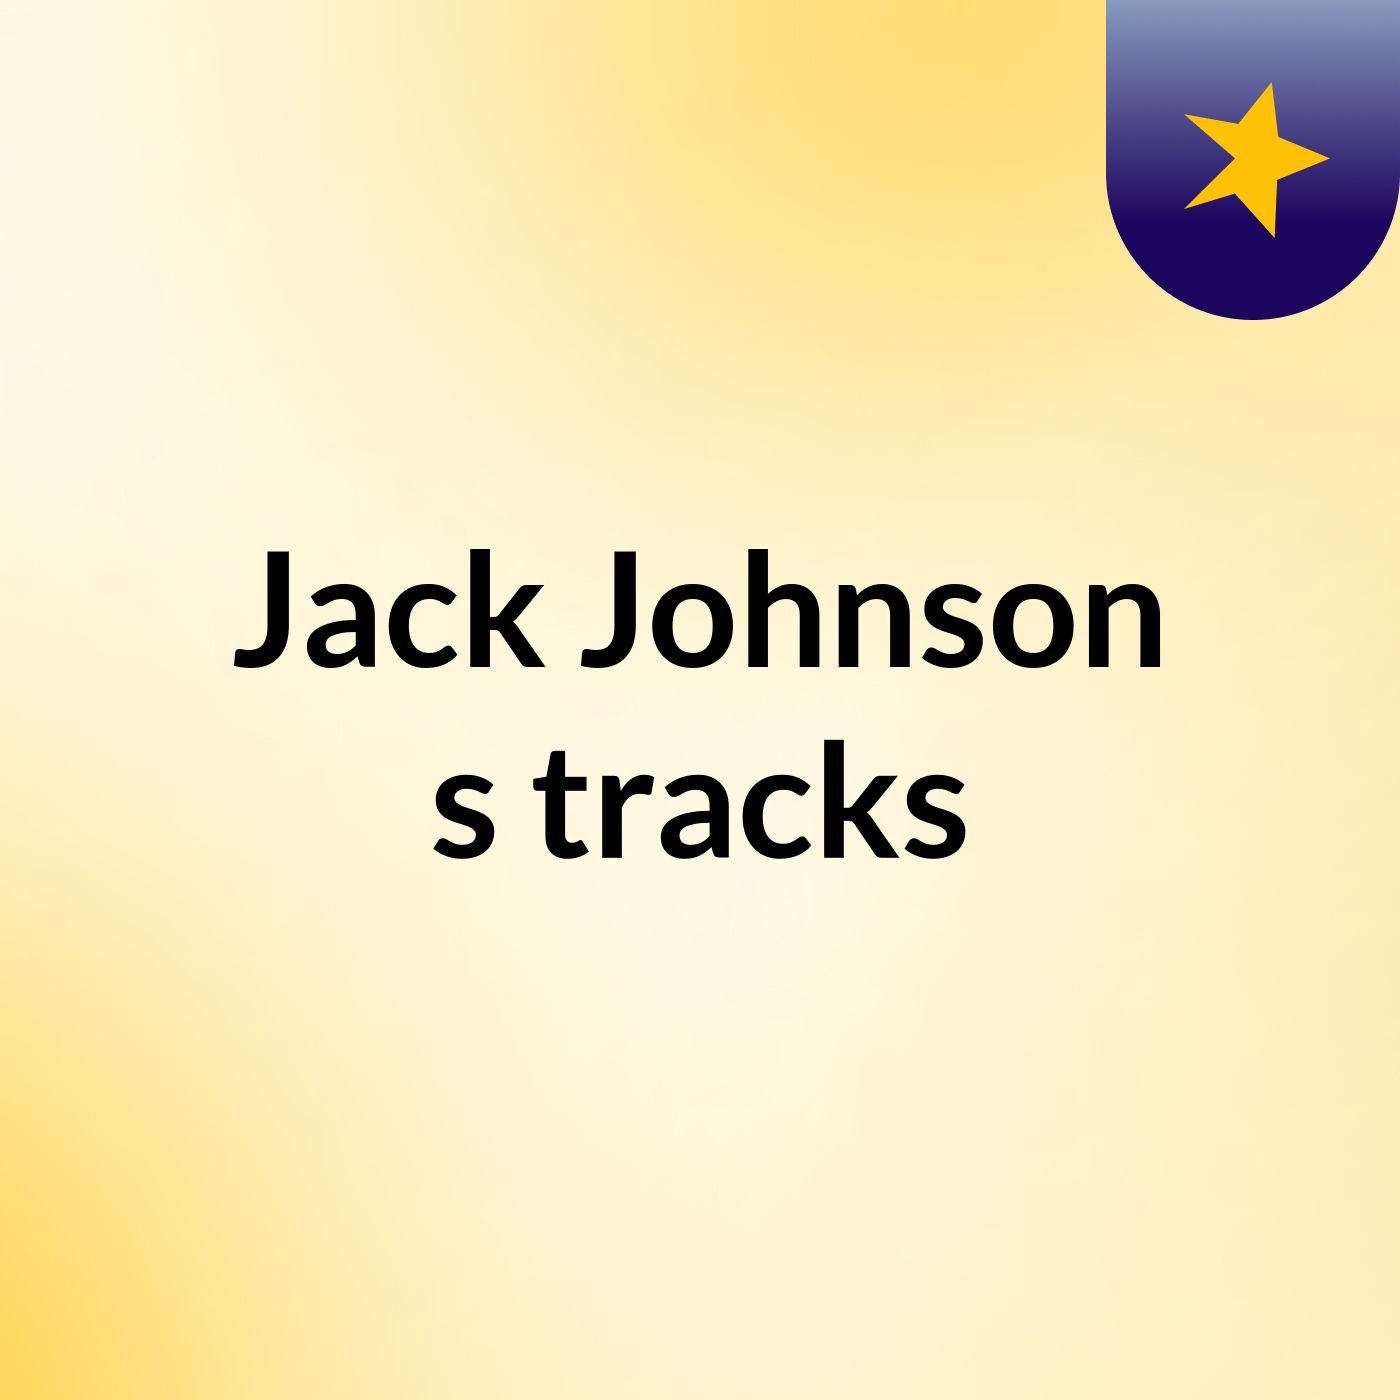 Jack Johnson's tracks